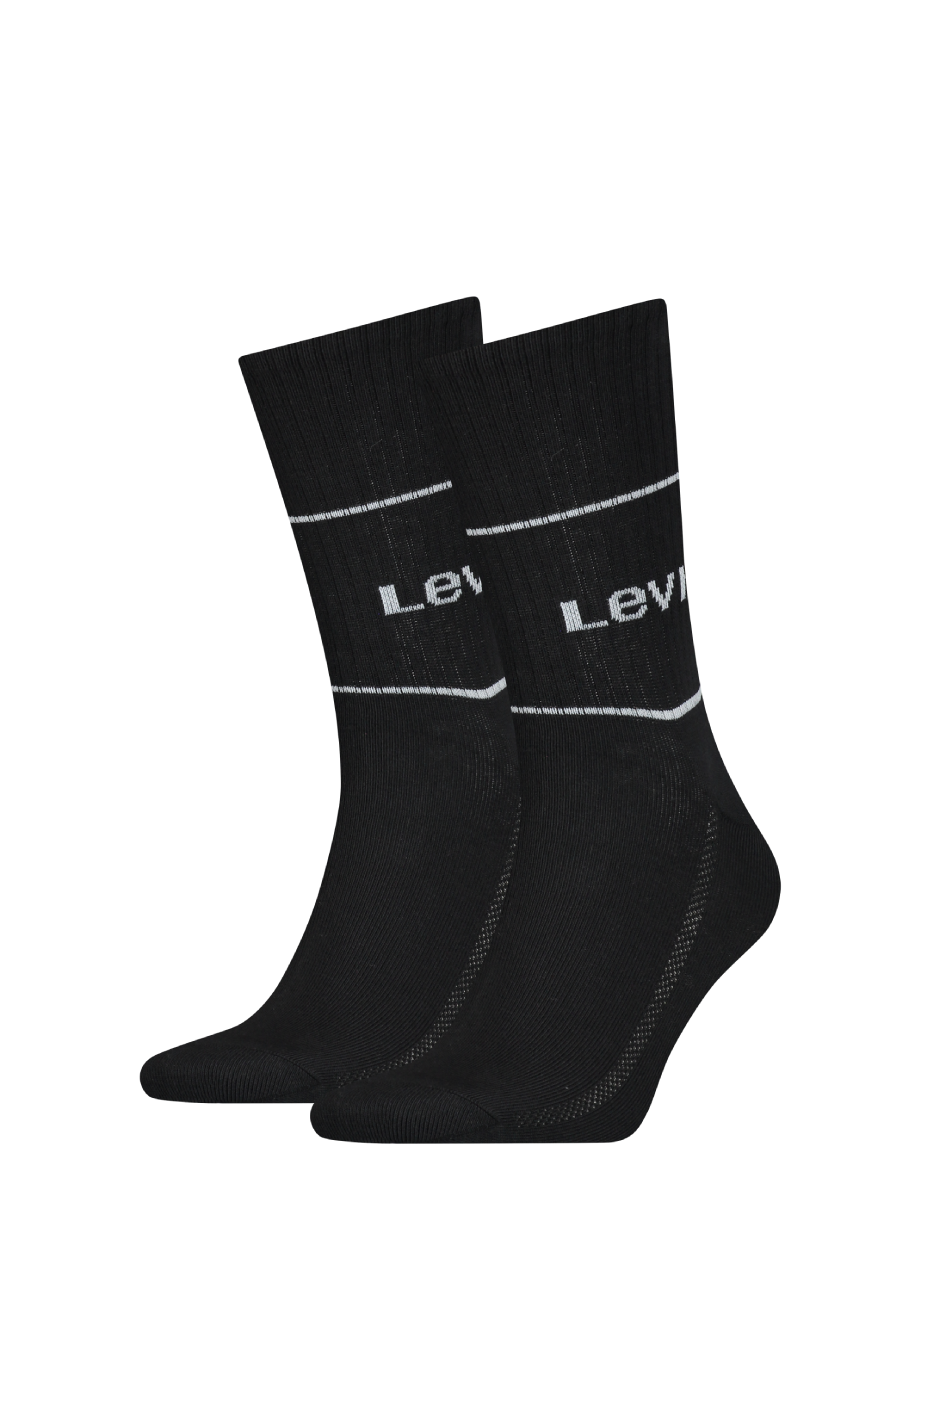 Levi's Men's 2 Pack Short Cut Logo Sport Sock